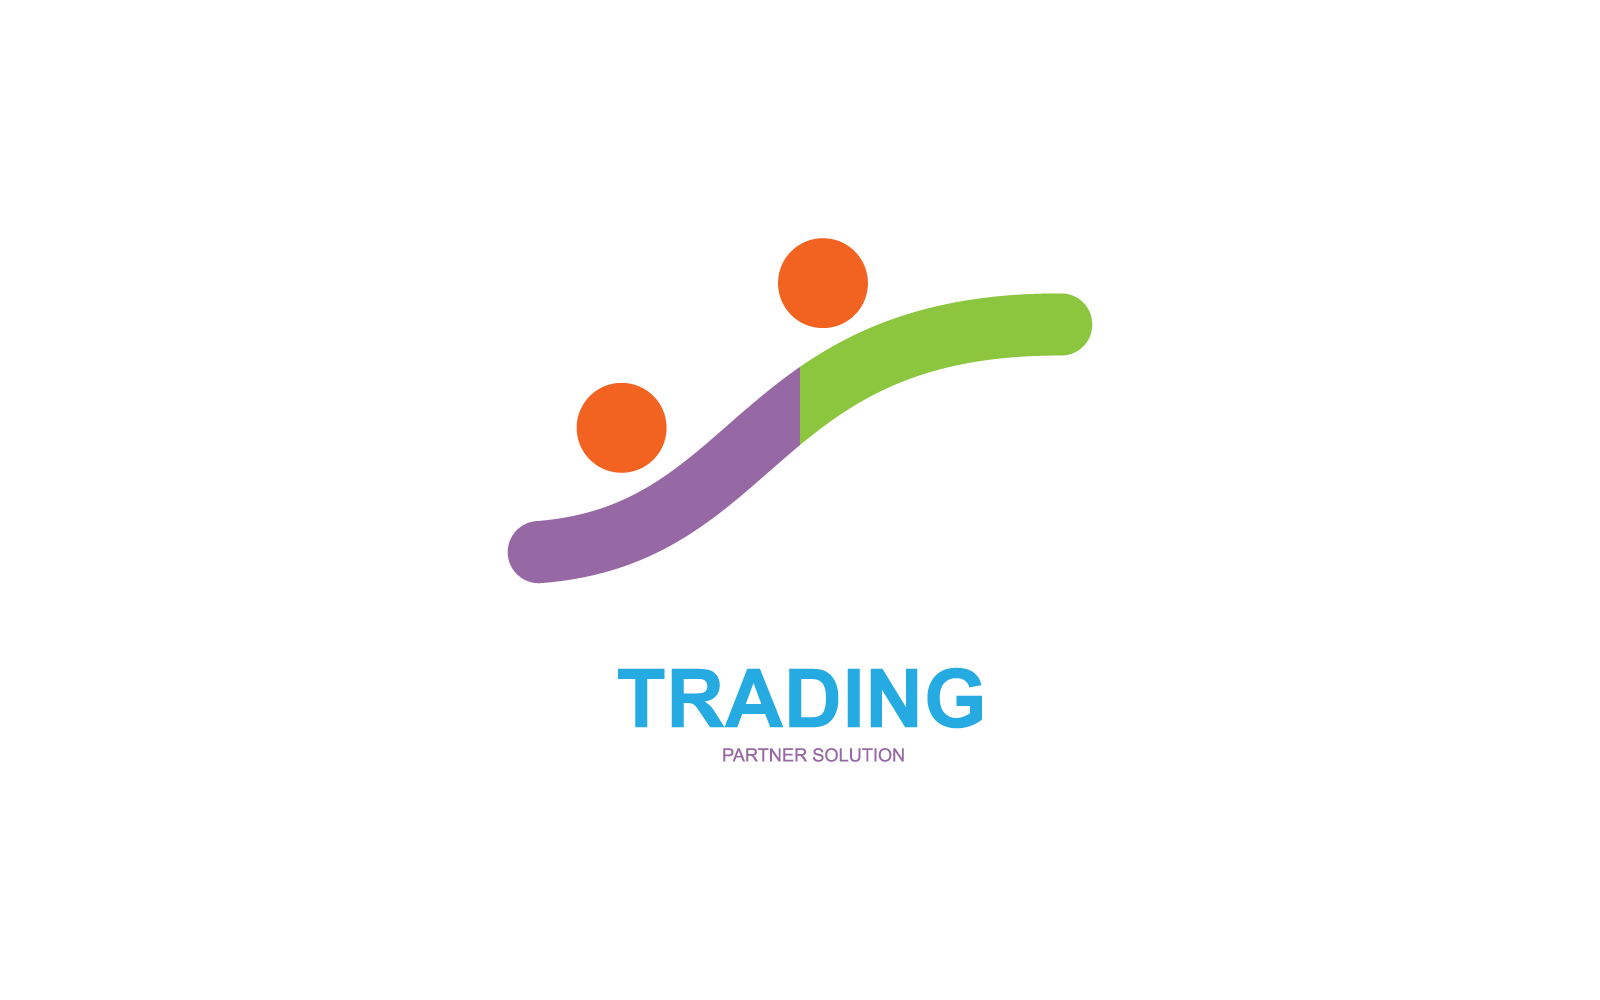 Business Trading logo vector illustration template Logo Template